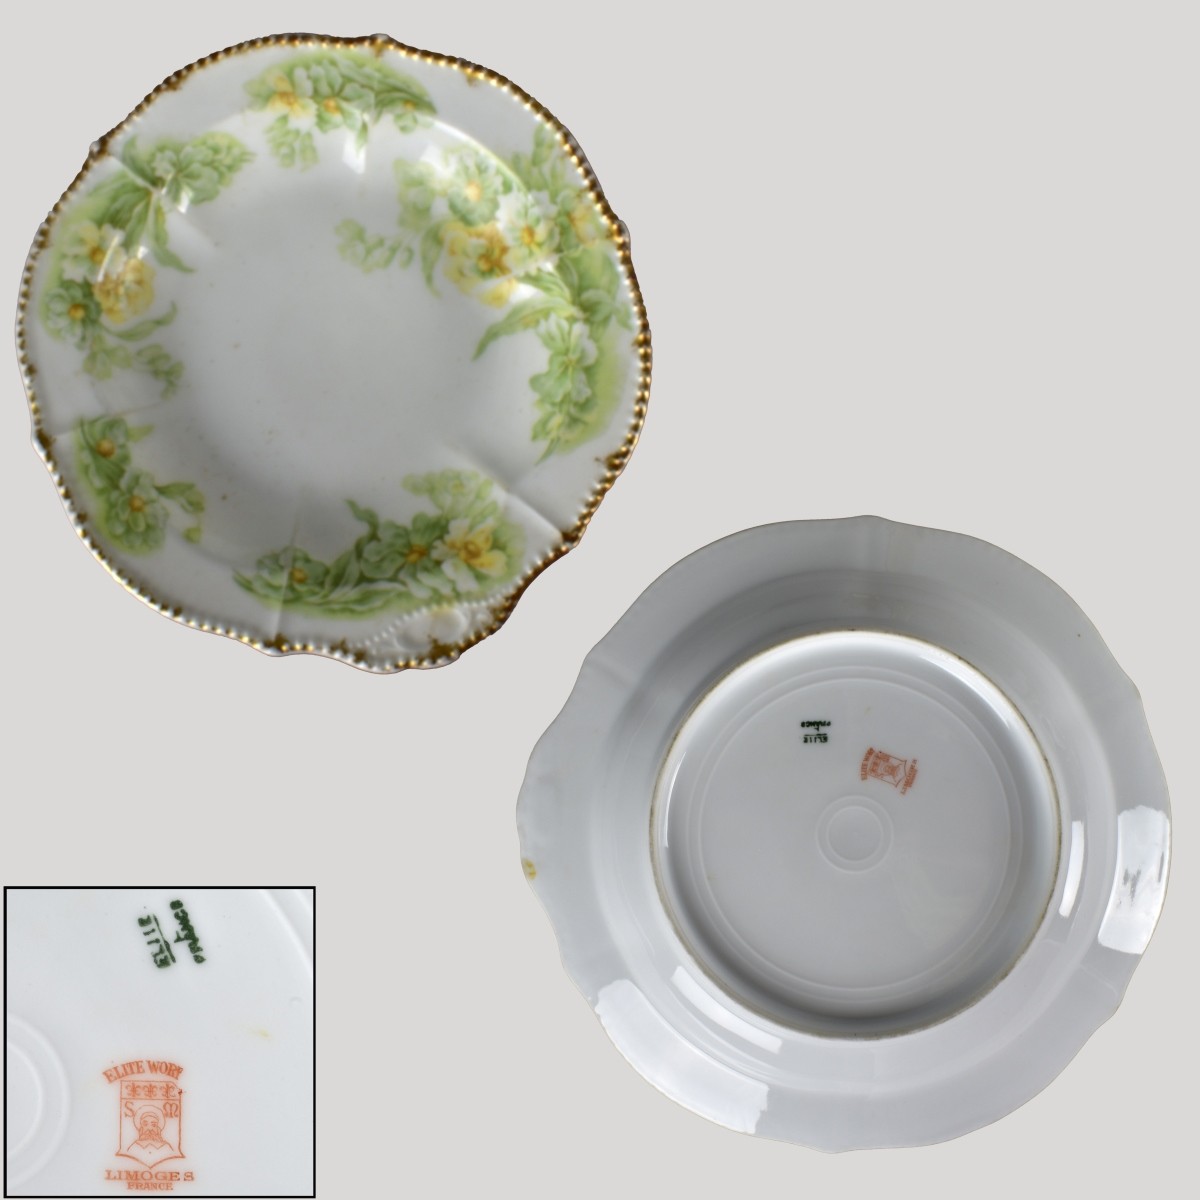 Nineteen Assorted Porcelain Tableware